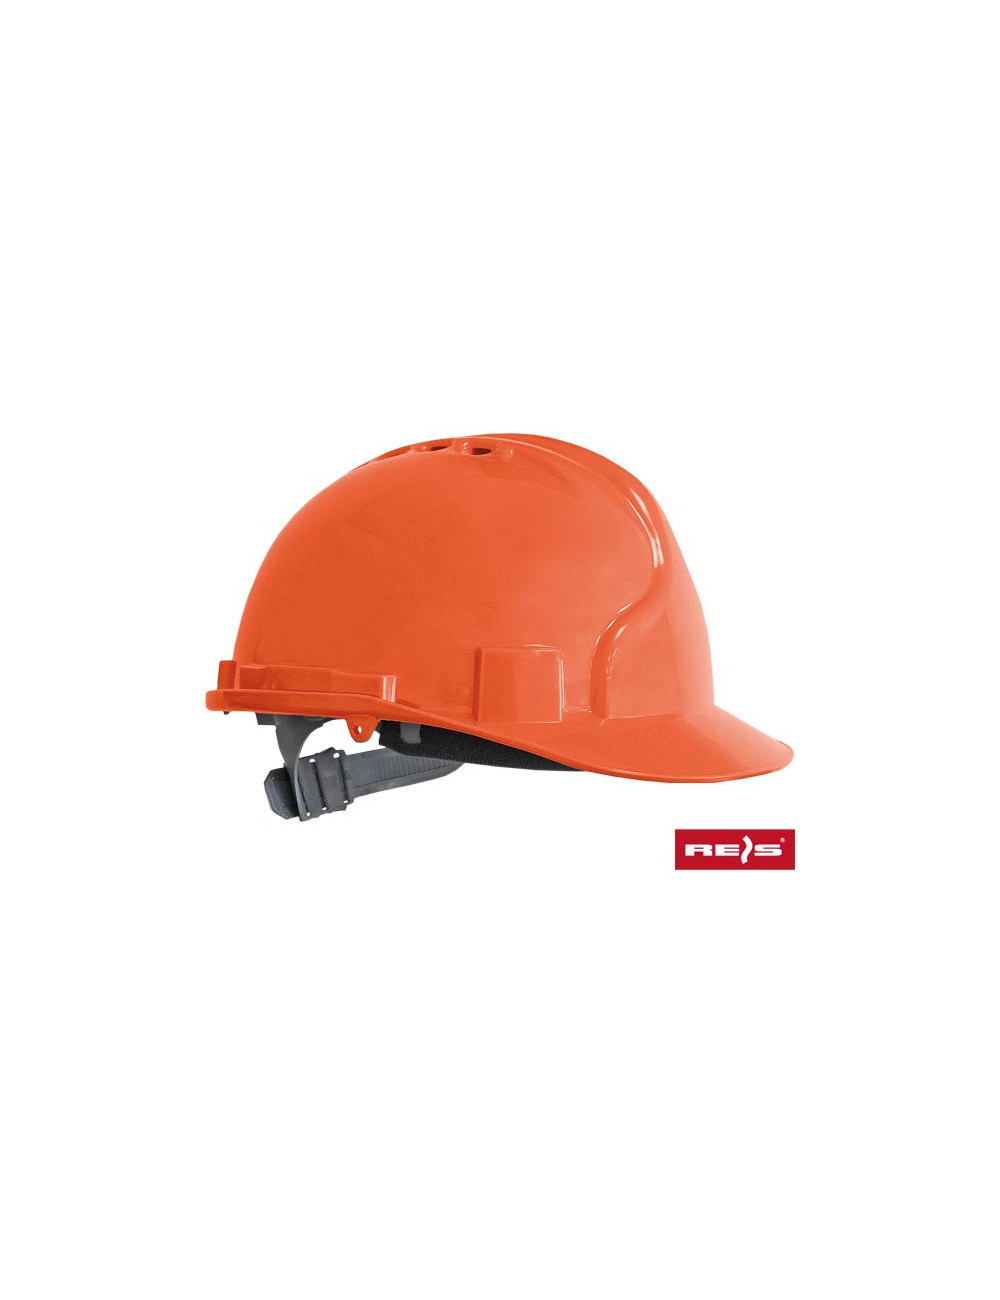 Safety helmet kas p orange Reis